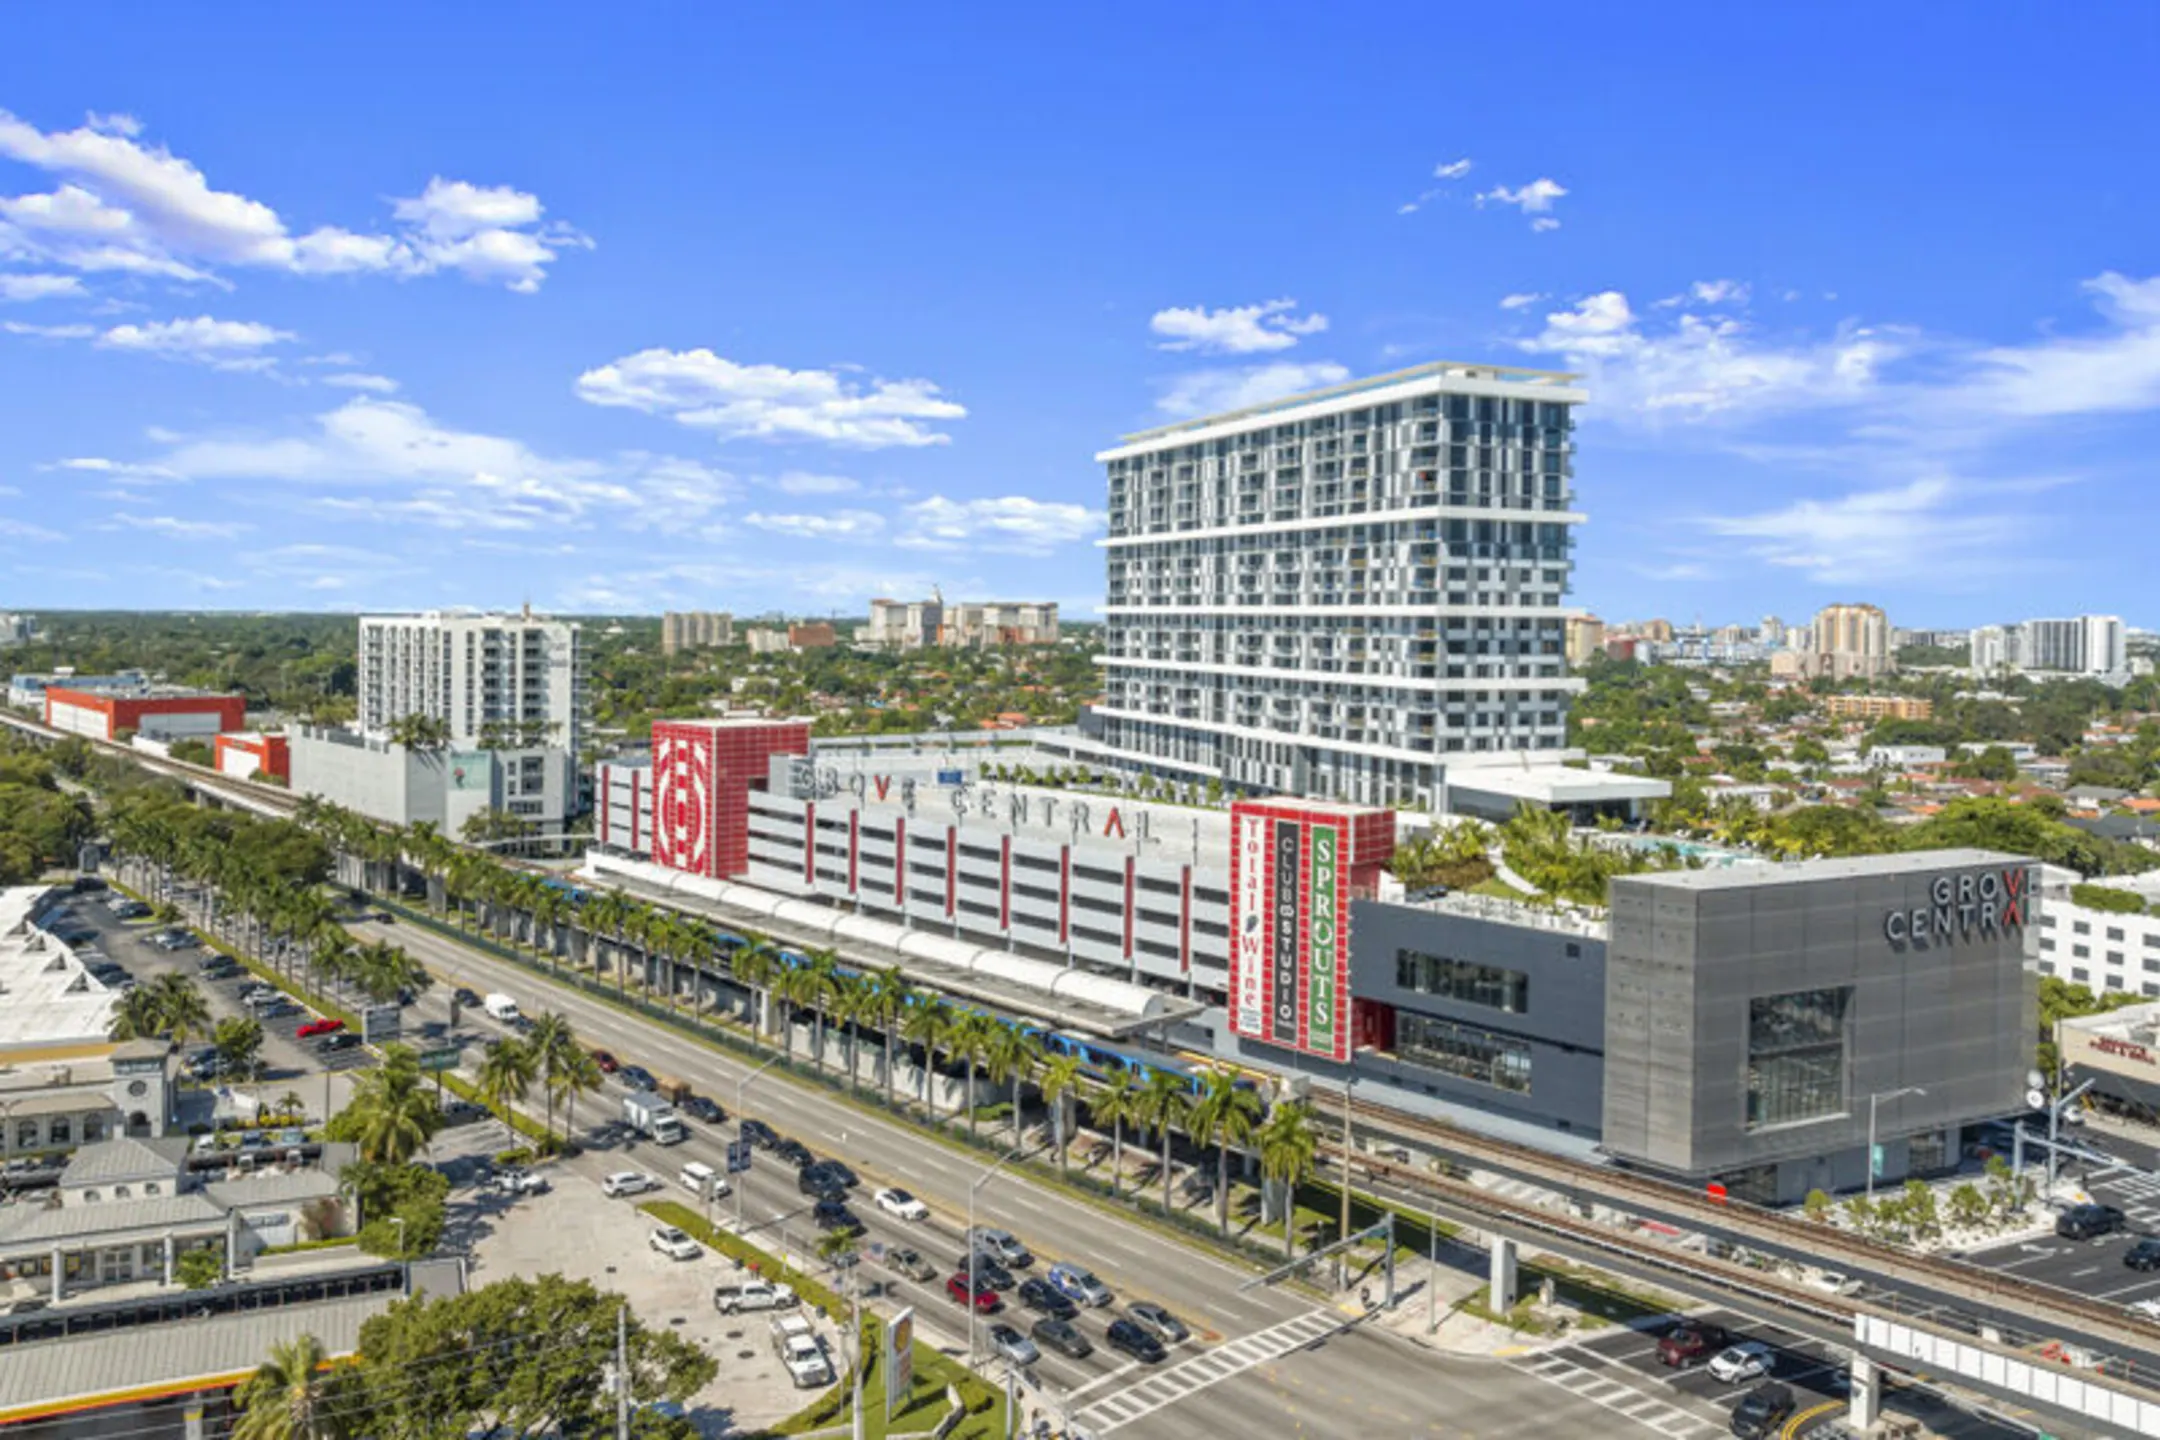 Building - Grove Central Residences - Miami, FL